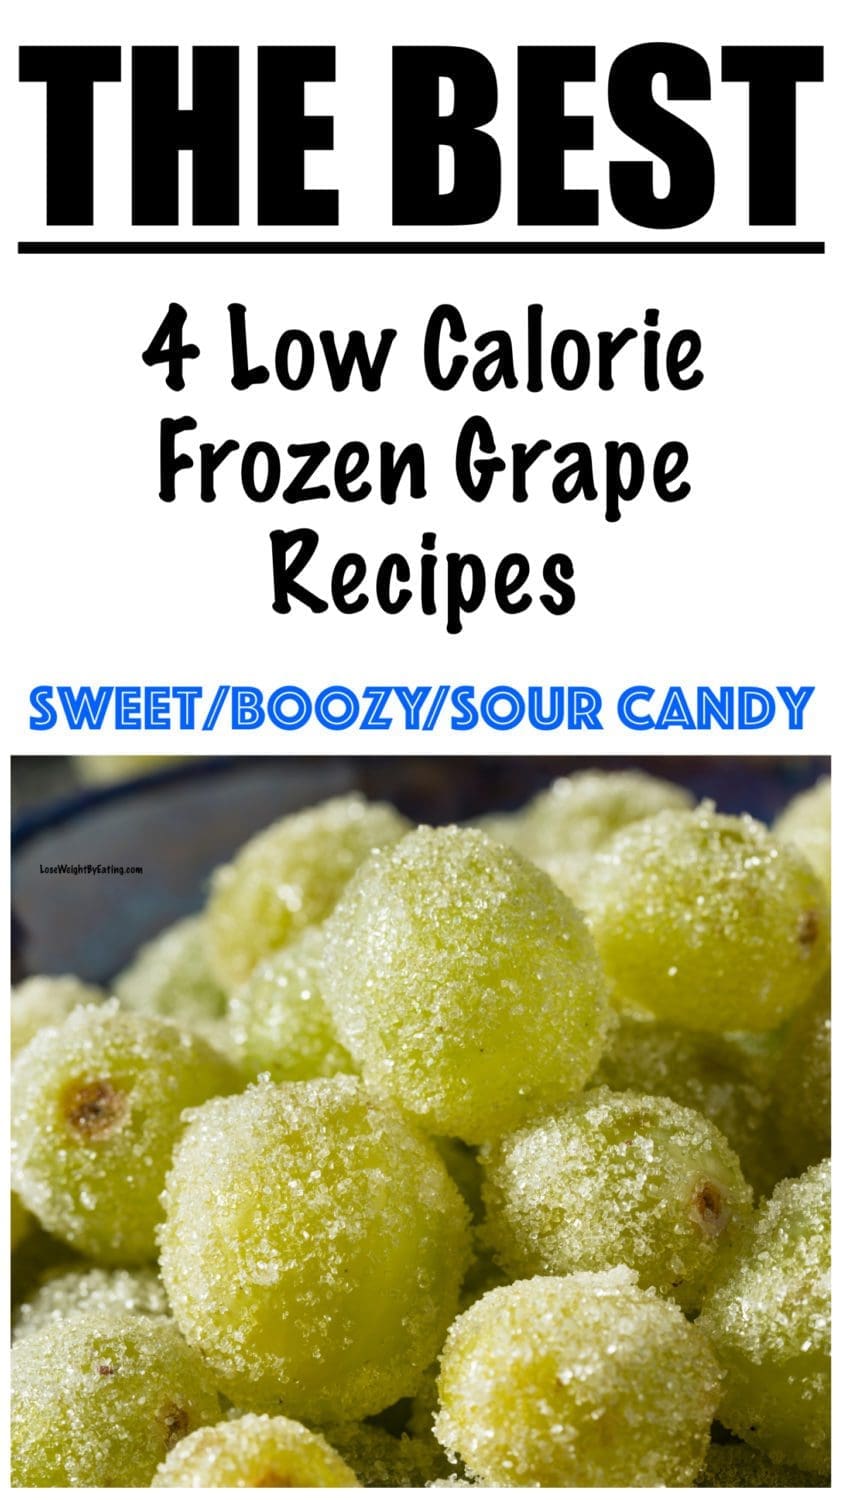 Frozen grapes recipe